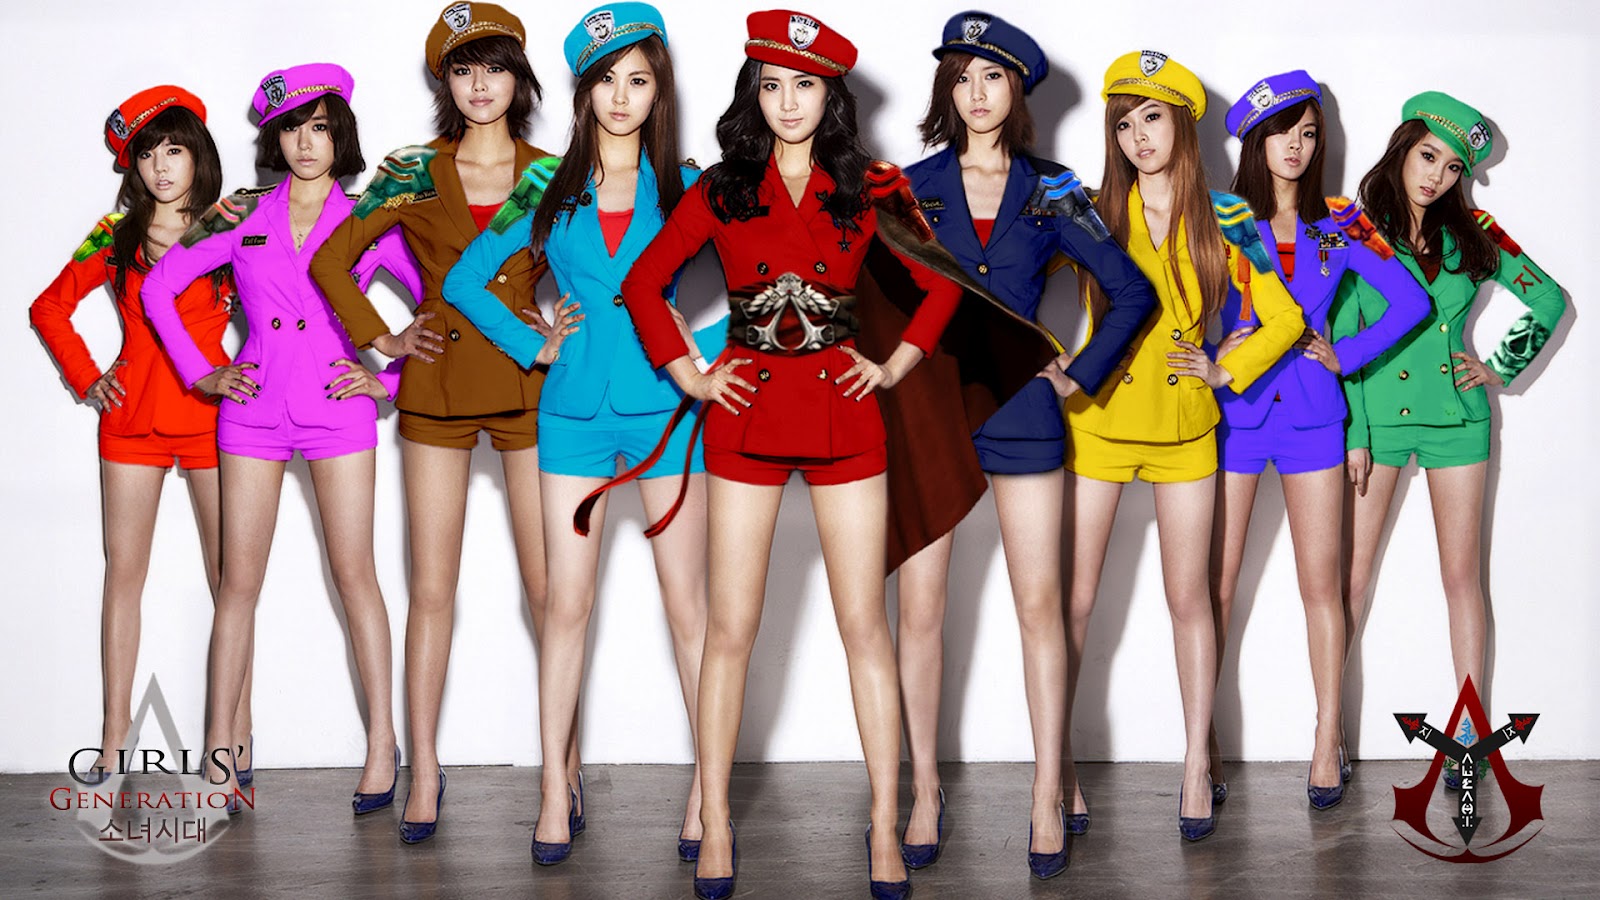 http://3.bp.blogspot.com/-2I9B_DK7Yso/UE_cw2lHQ5I/AAAAAAAAGvI/BYpJuFcP9qo/s1600/Girls+Generation+Colorful+Sailor+Suits.jpg